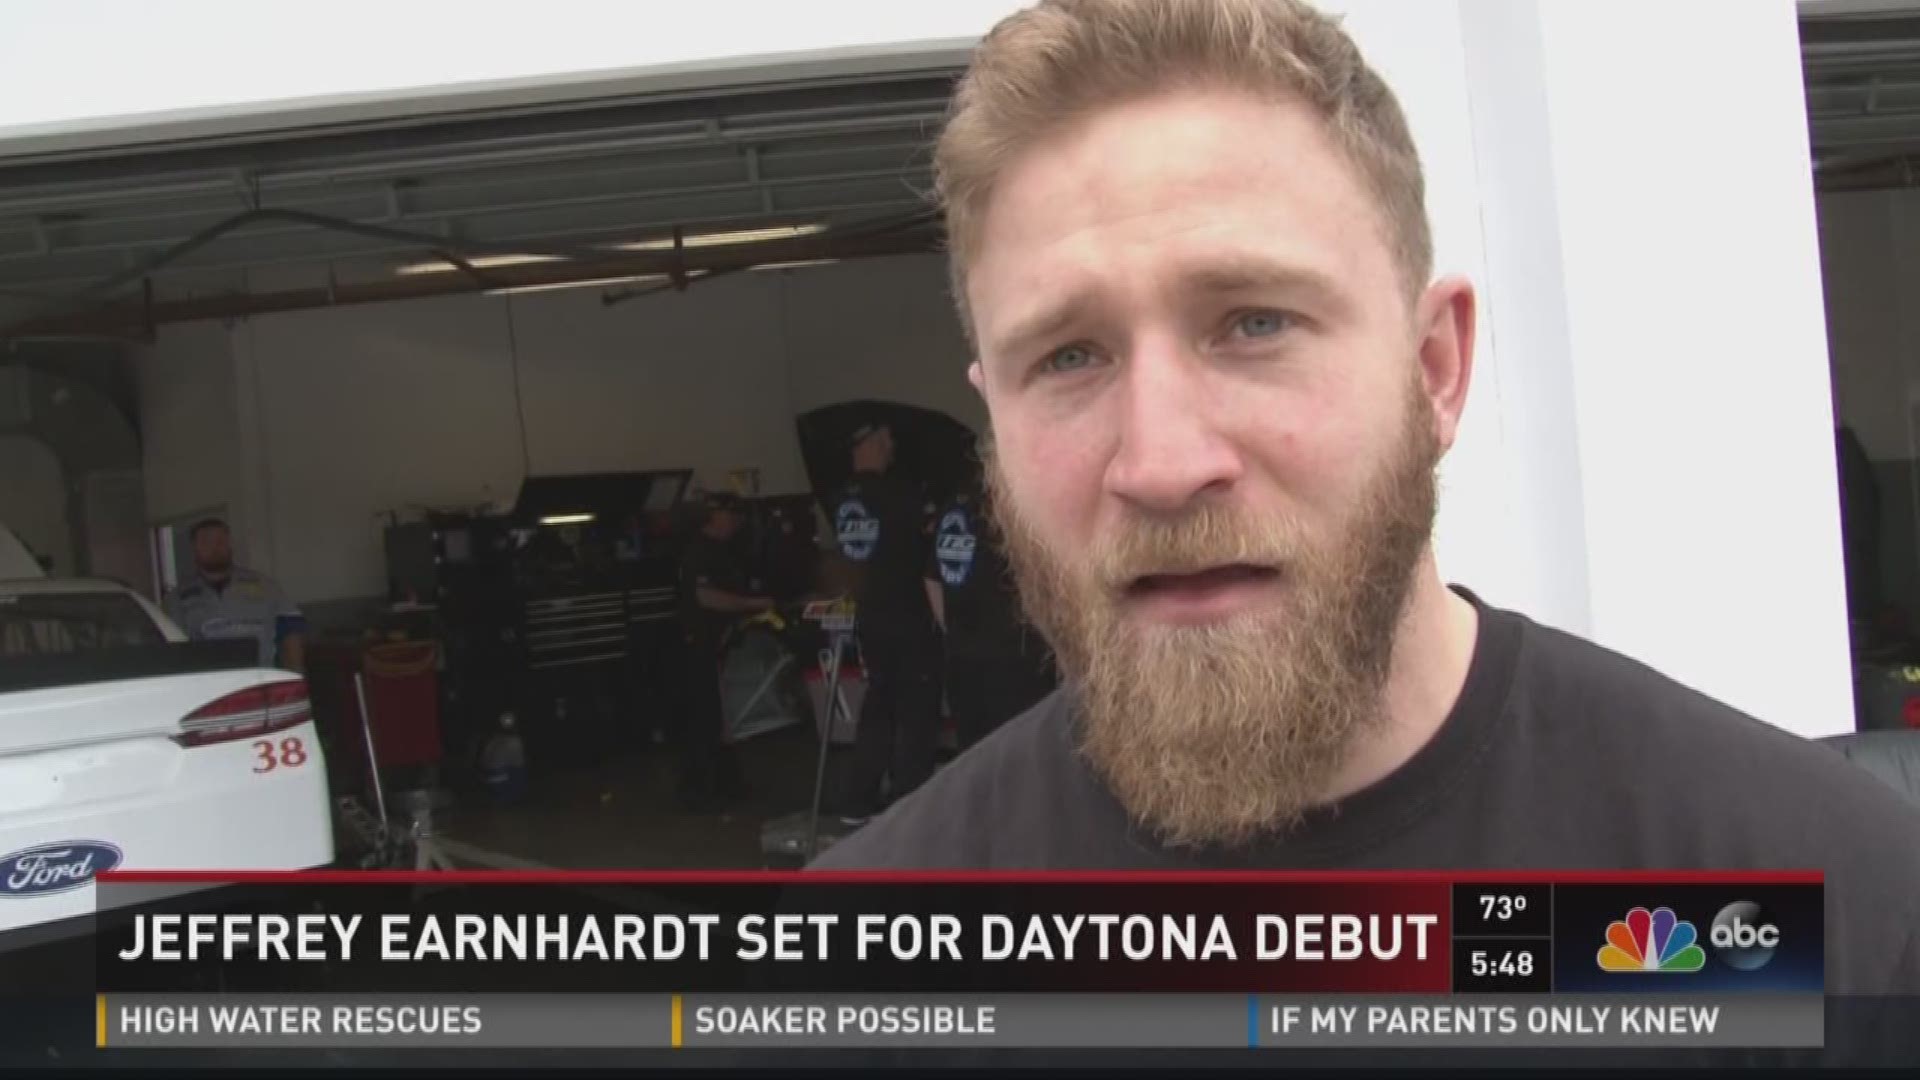 Jeffrey Earnhardt set for Daytona debut